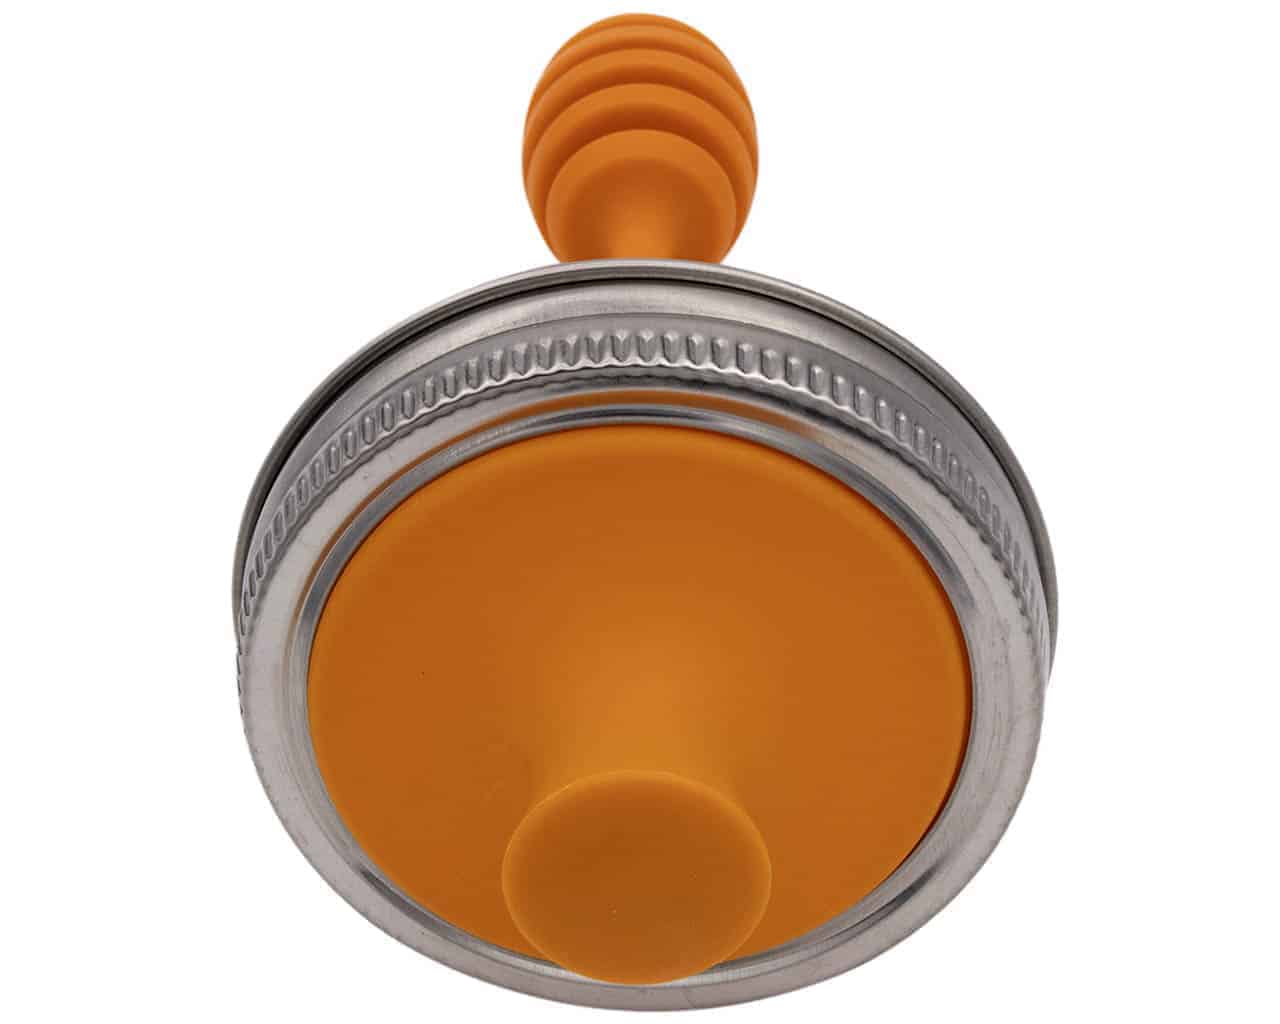 jarware-orange-plastic-honey-dipper-with-mason-jar-lifestyle-regular-mouth-stainless-steel-rust-proof-band-top